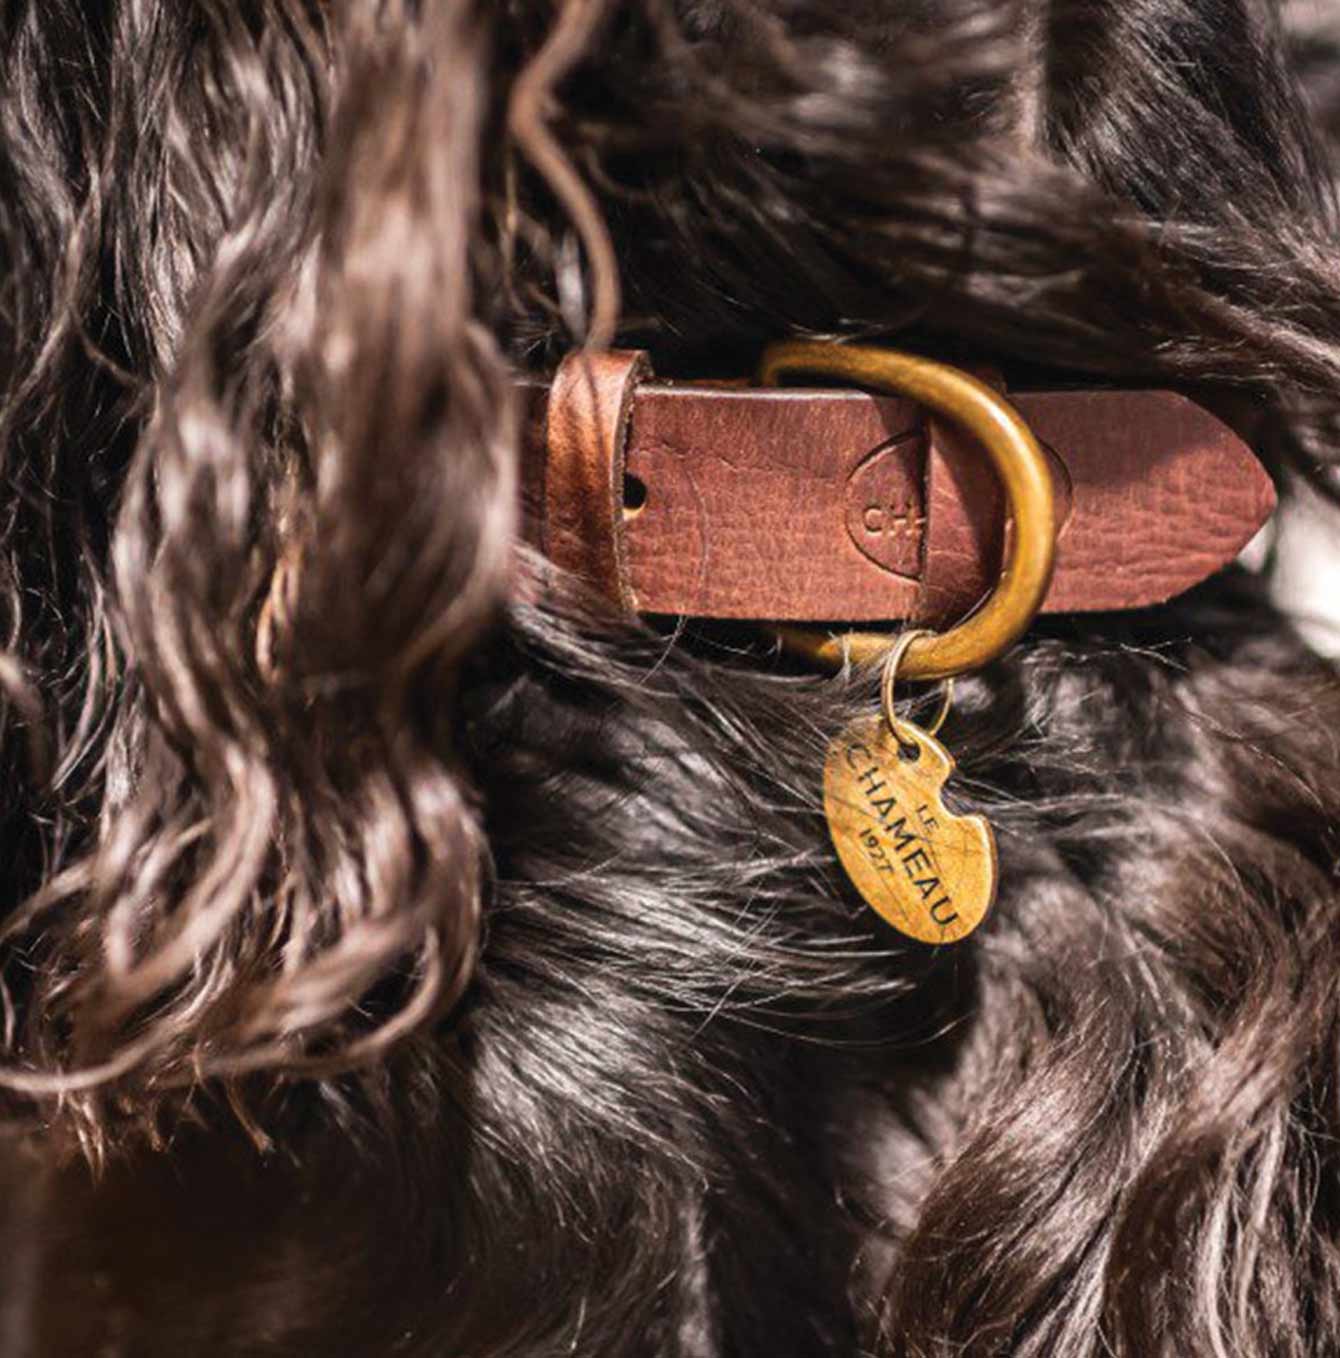 Le Chameau marron dog collar on brown dog